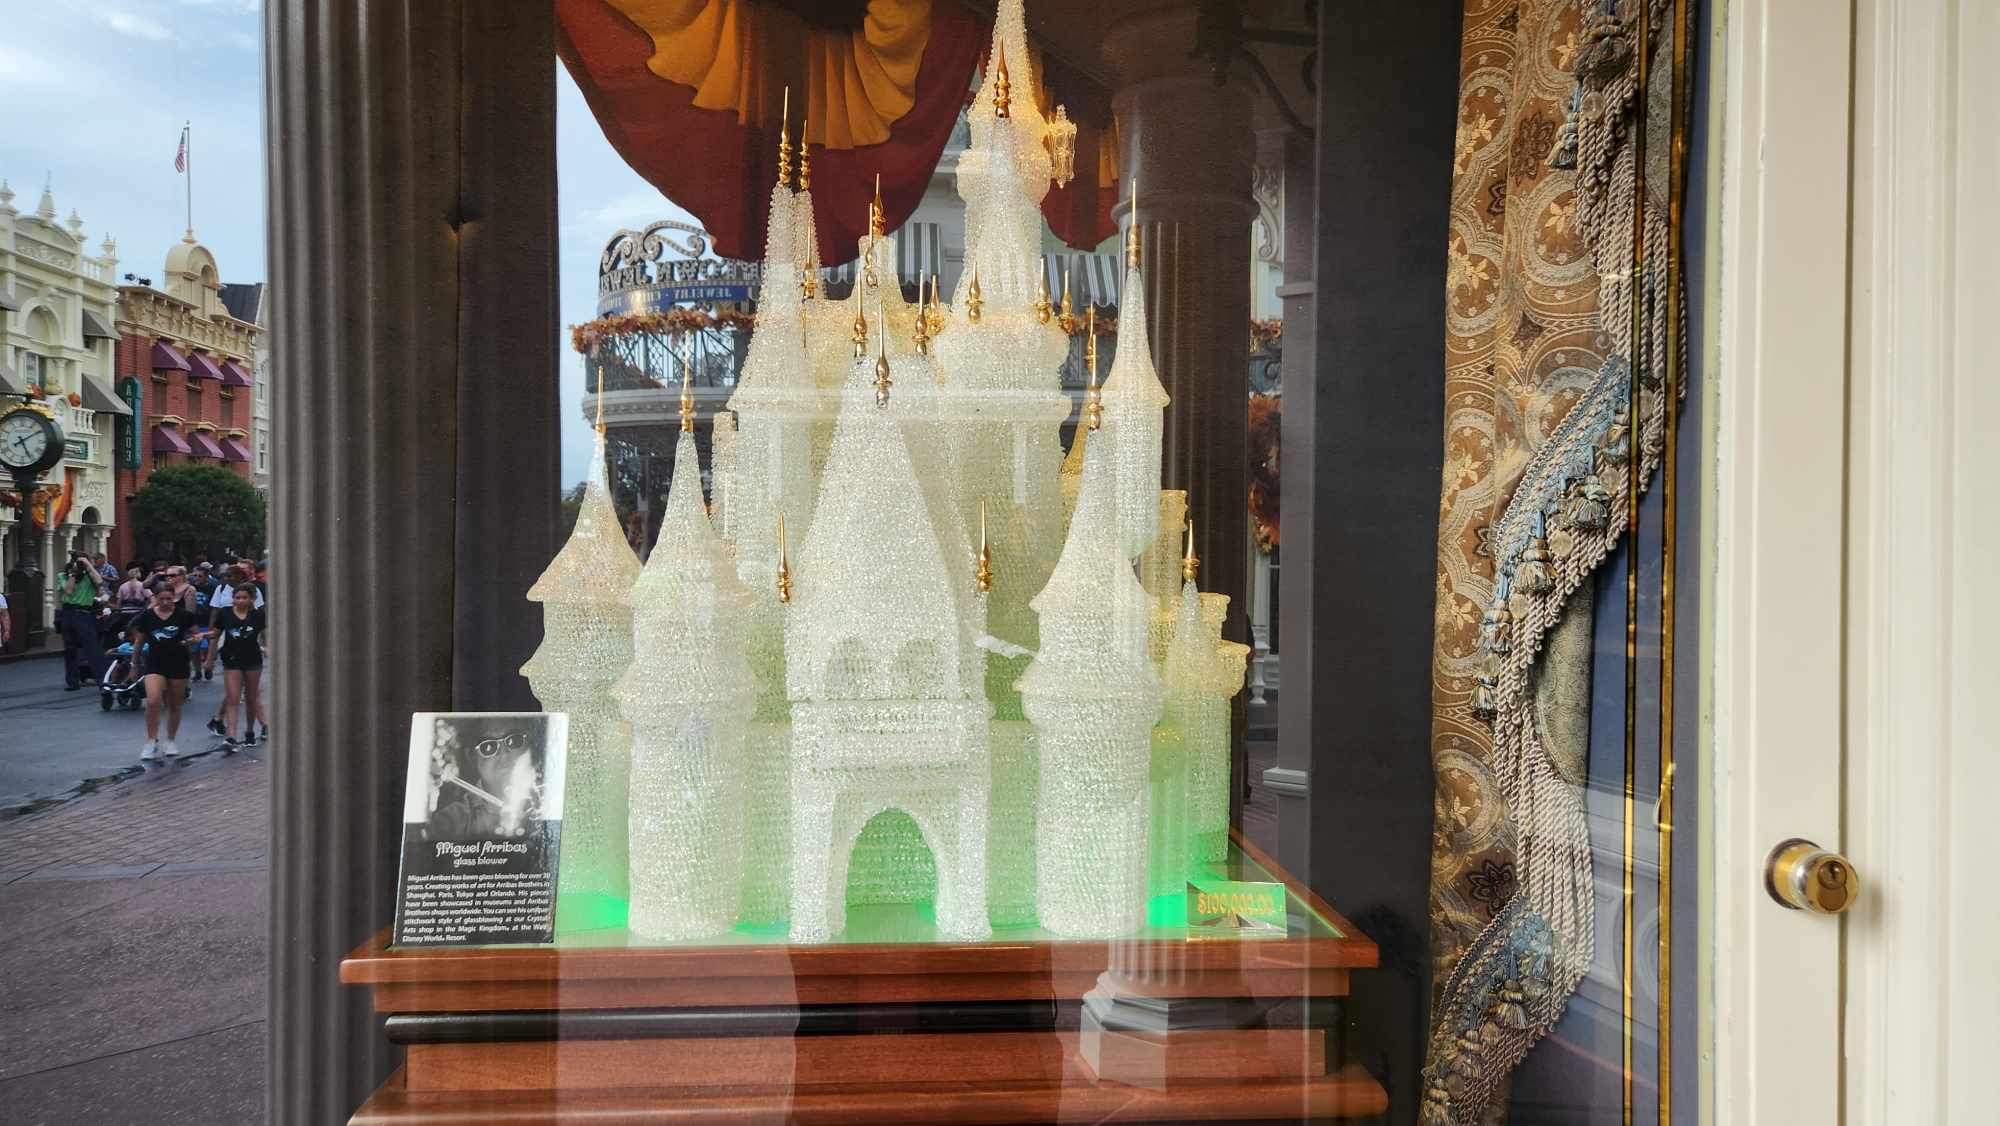 Lighted Cinderella Castle at Disneyland